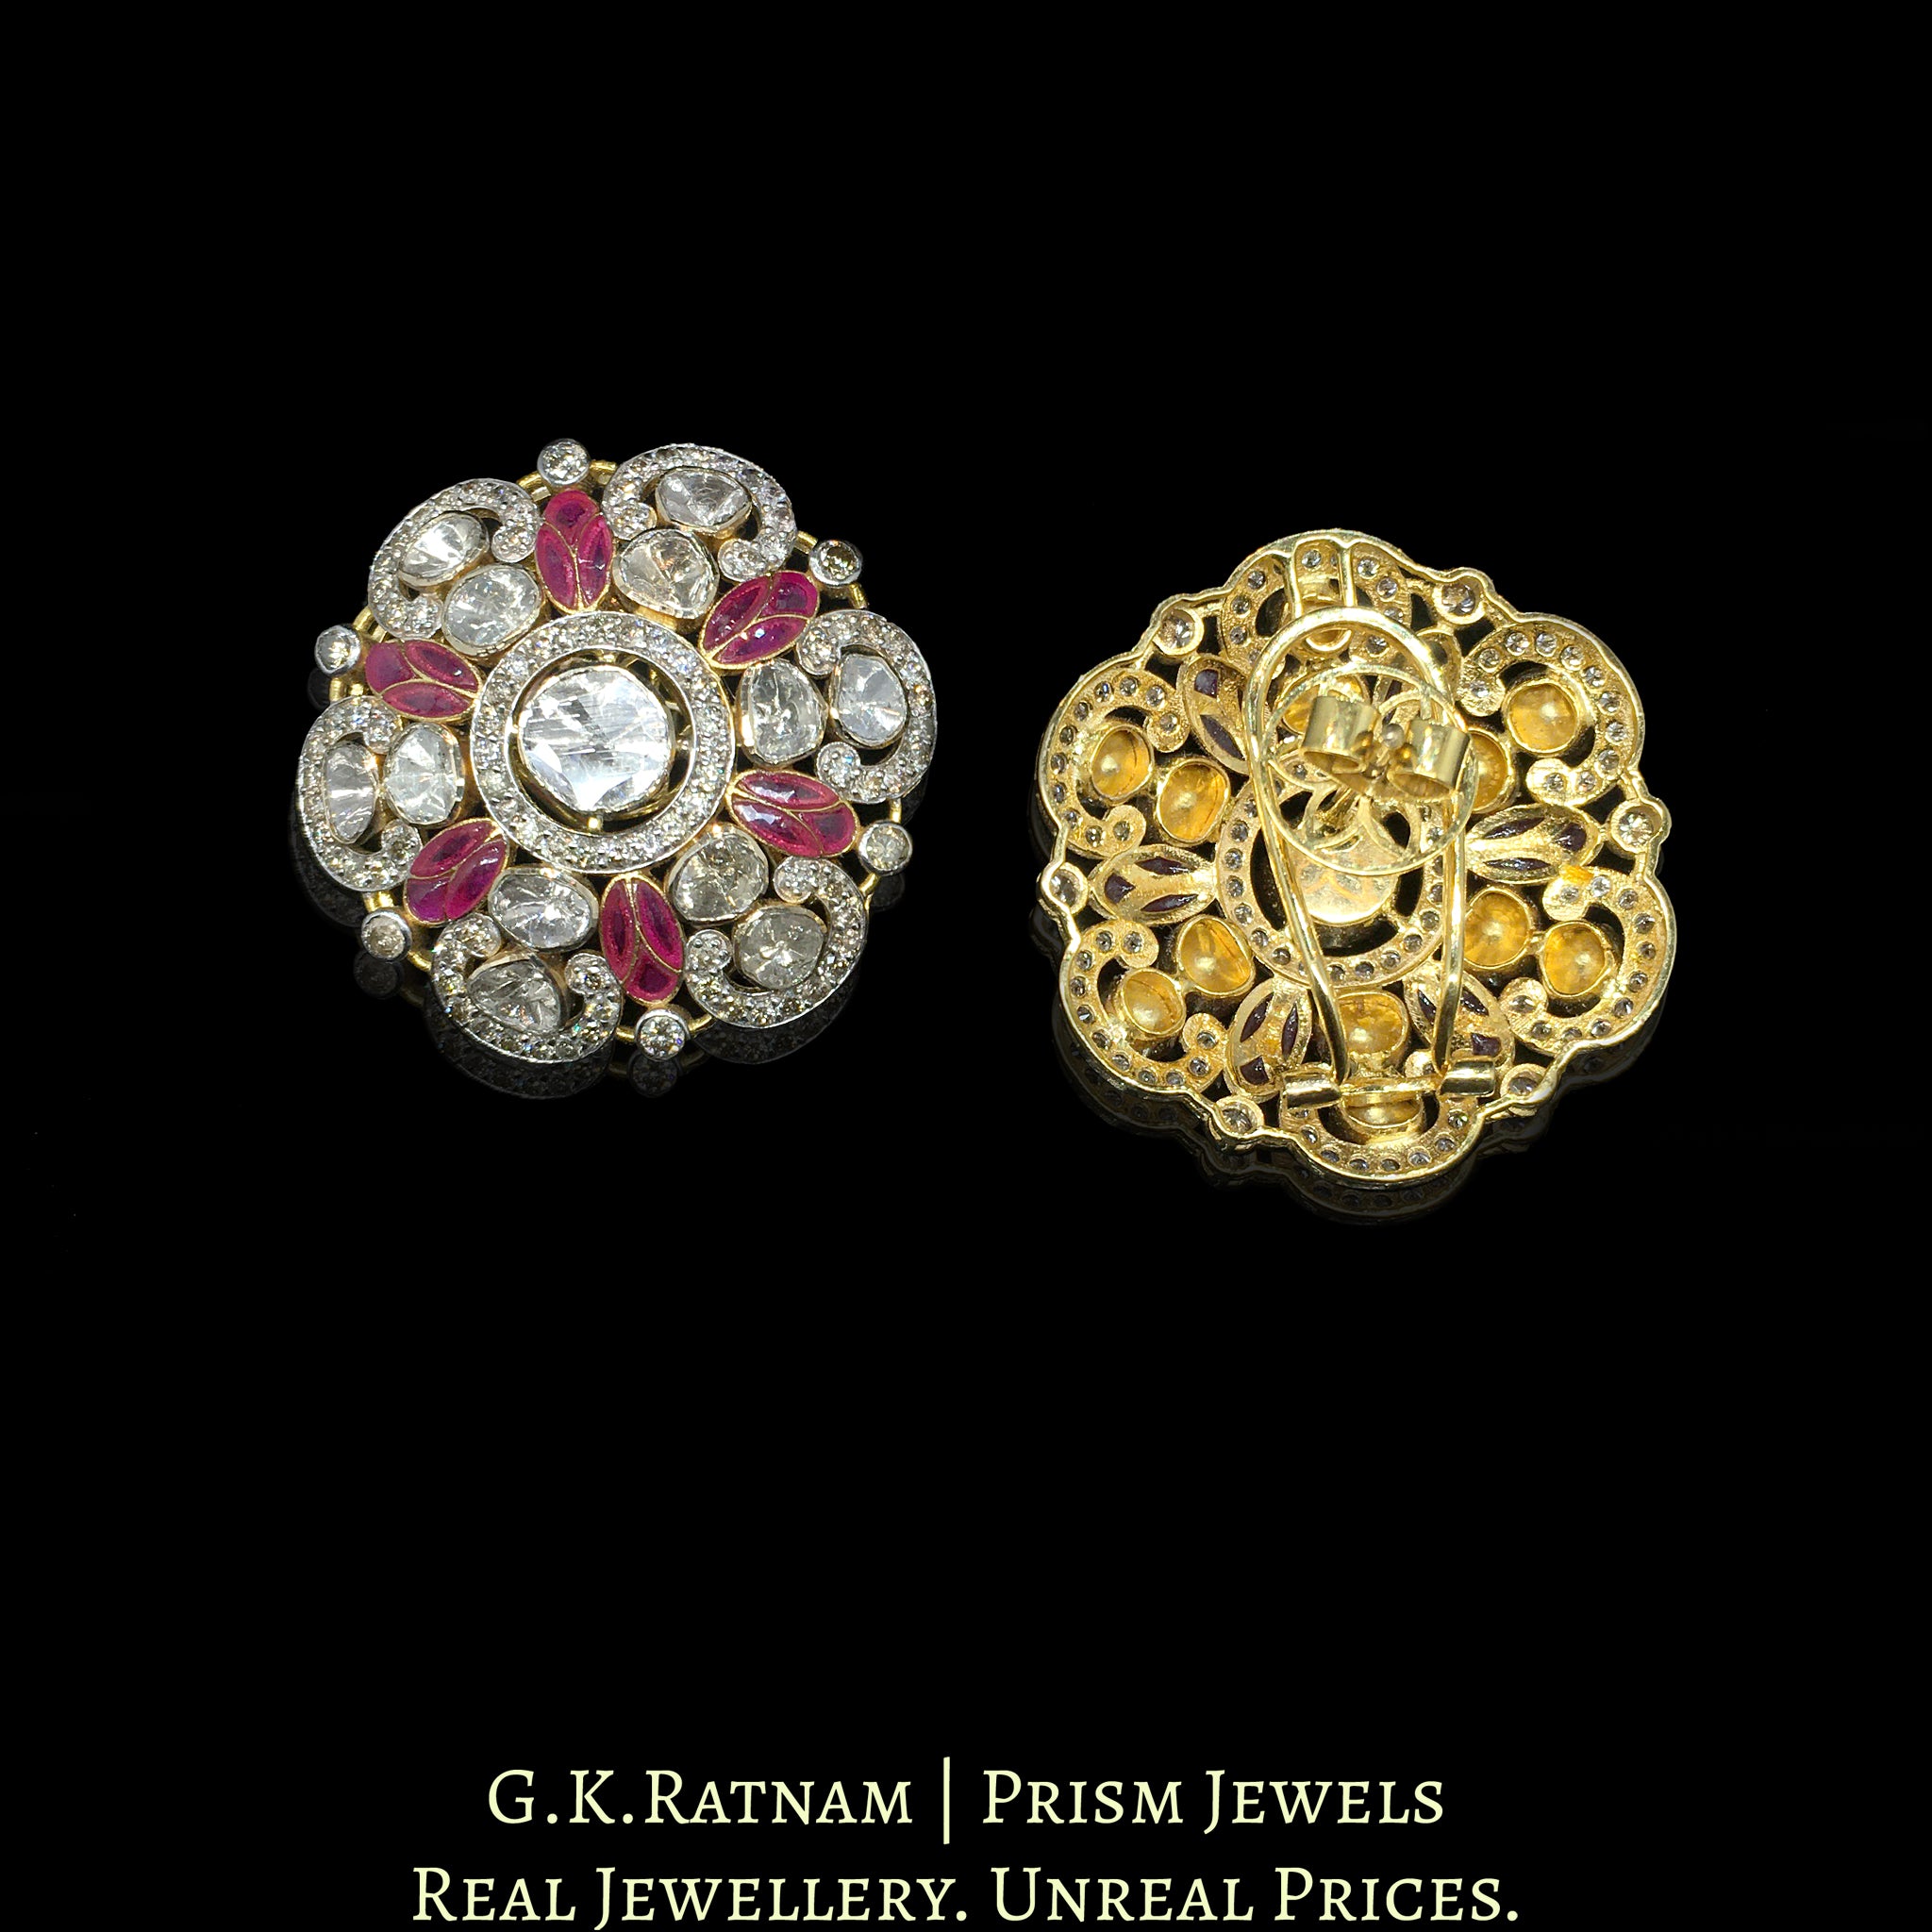 14k Gold and Diamond Polki Open Setting Karanphool Earring Pair with Rubies